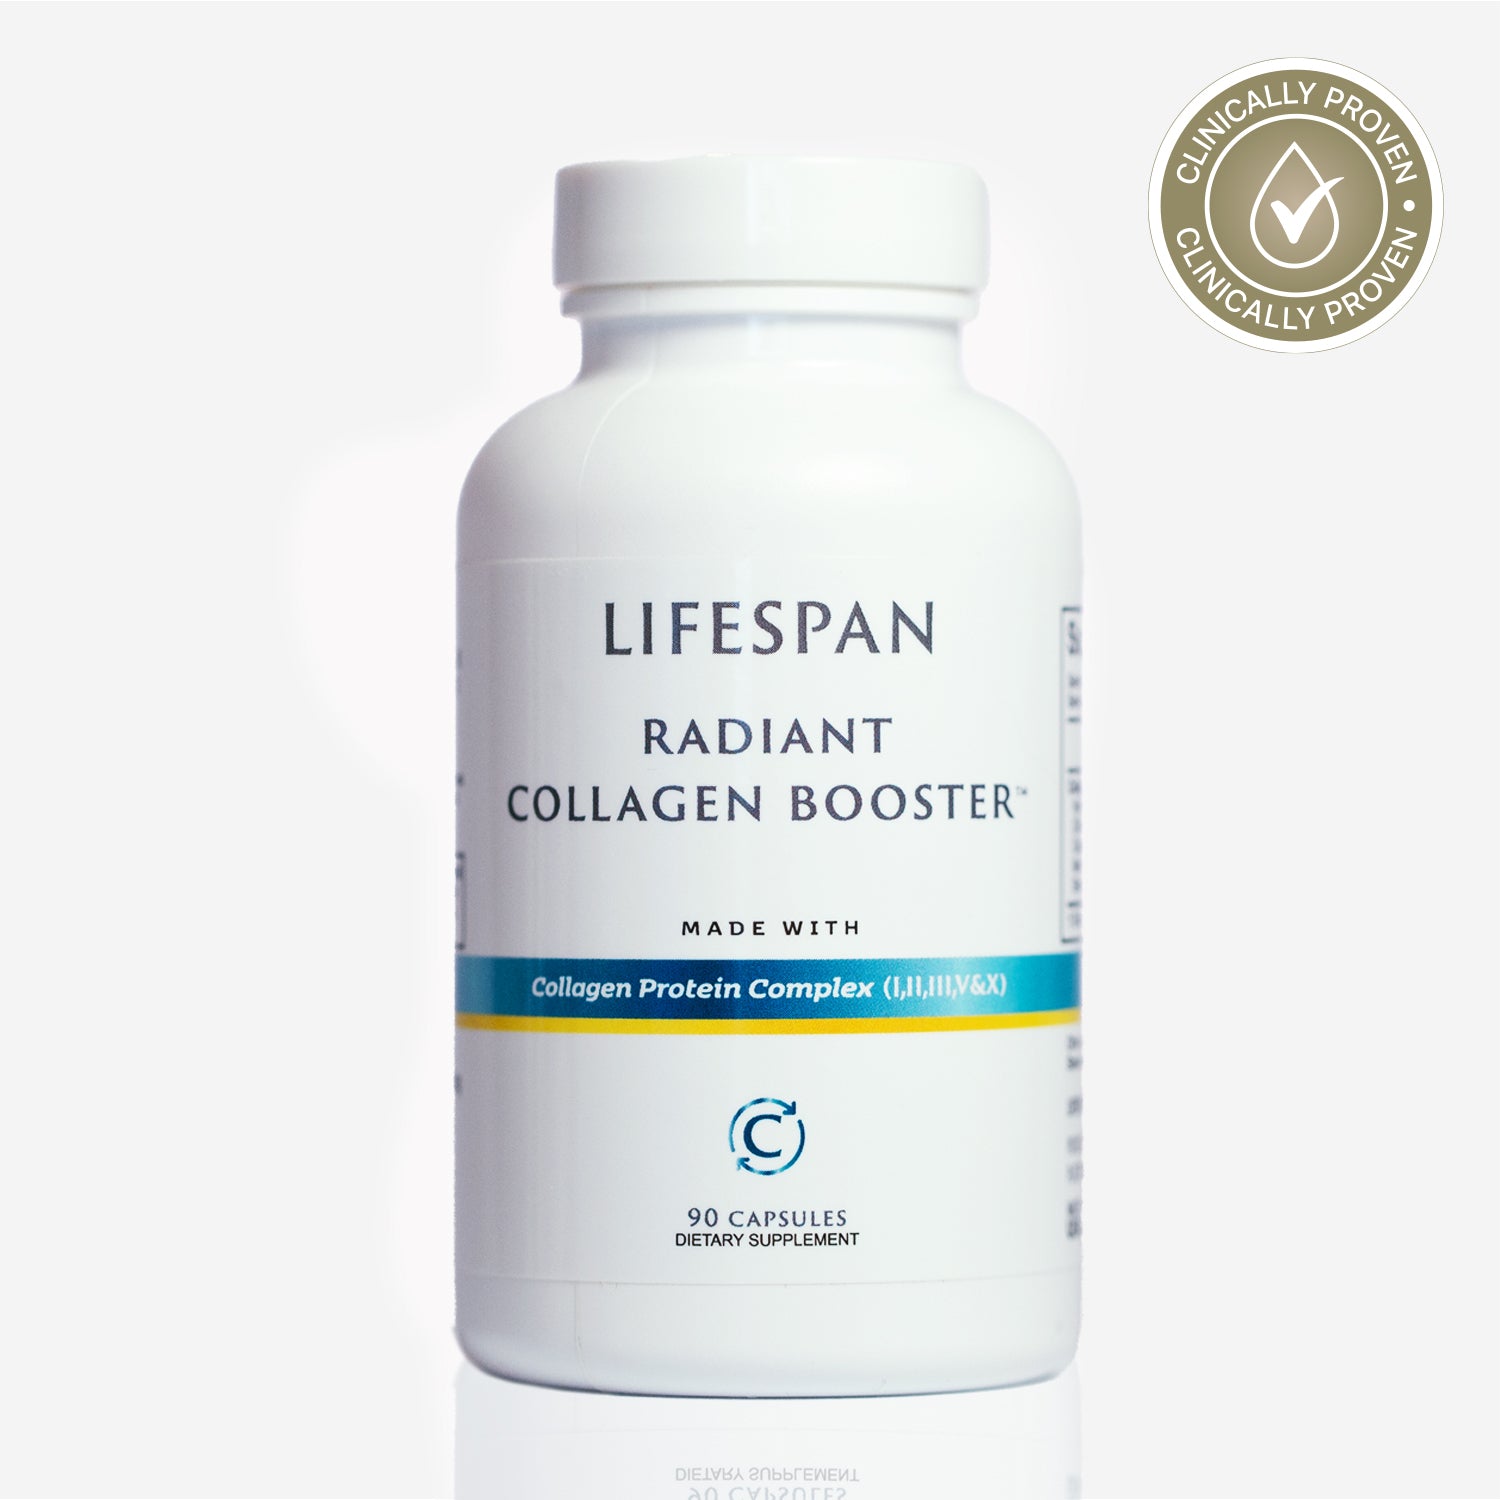 LifeSpan Radiant Collagen Booster